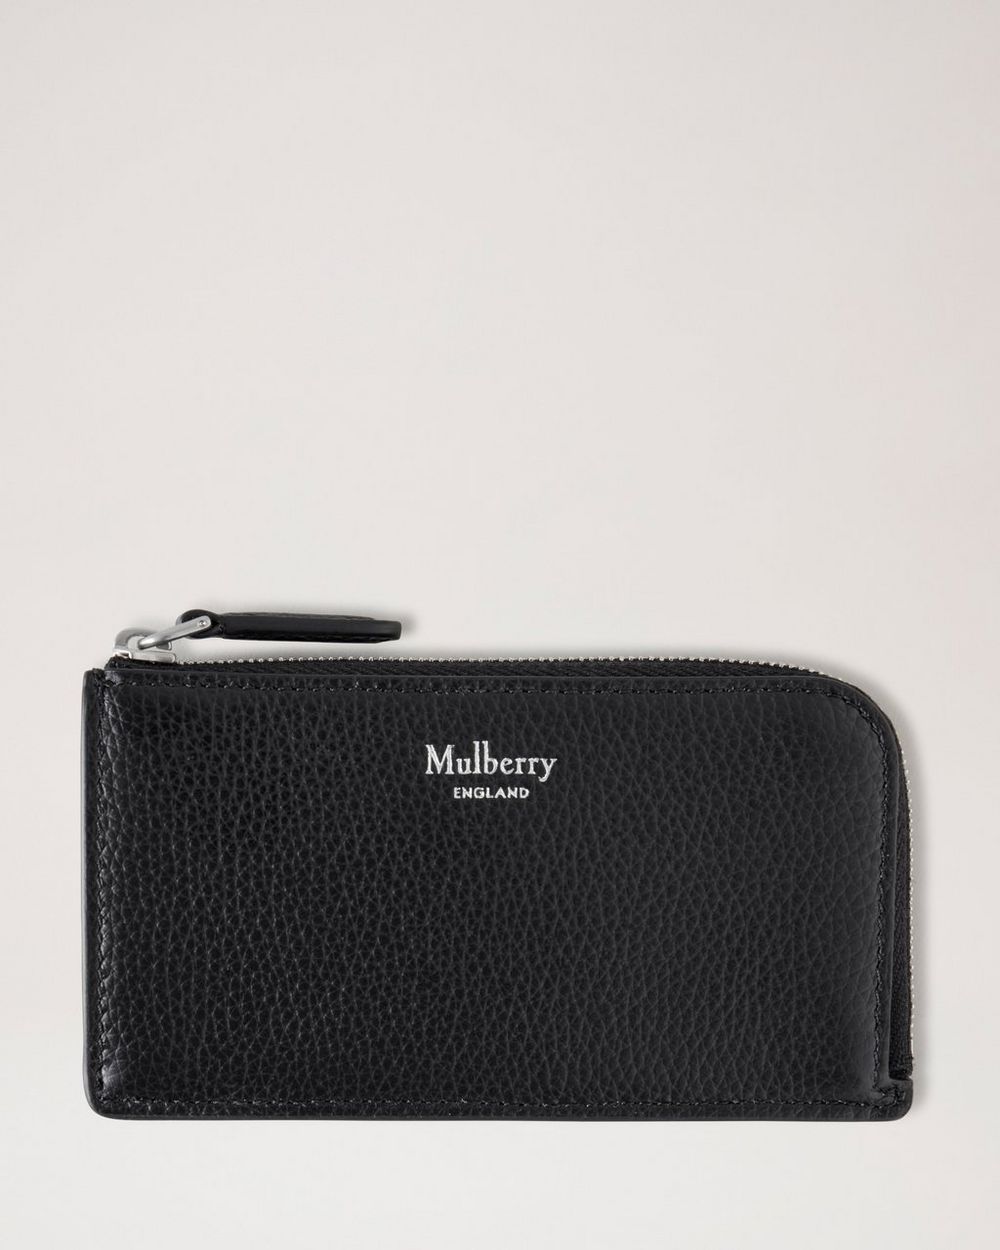 Leather key pouch black